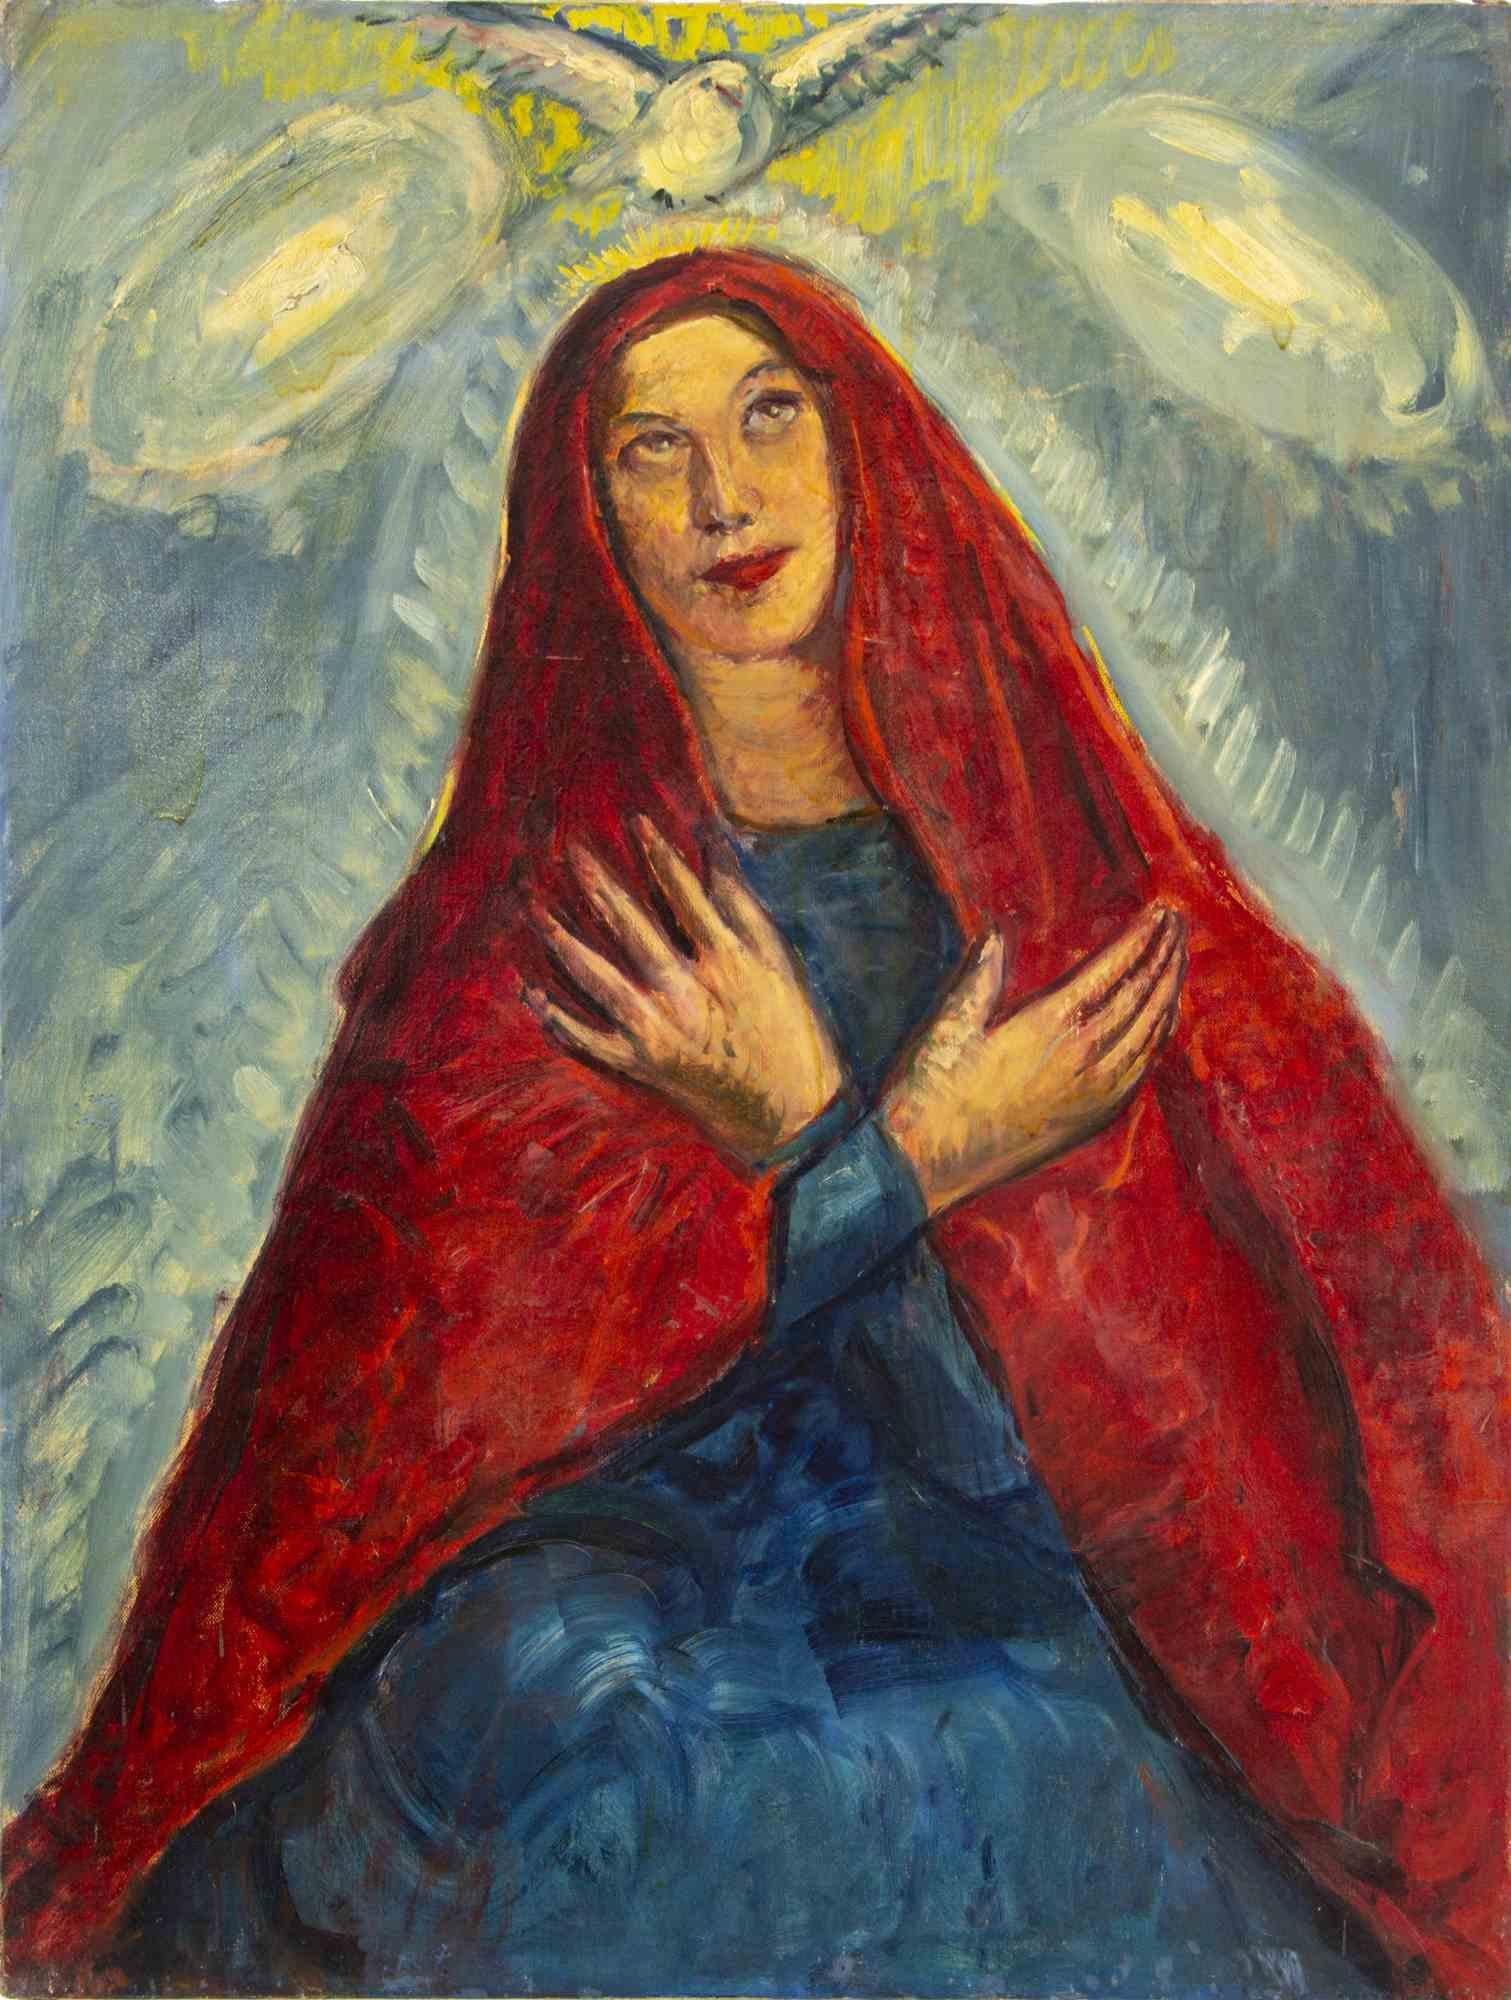 The Saint - Painting by Antonio Feltrinelli - 1930s